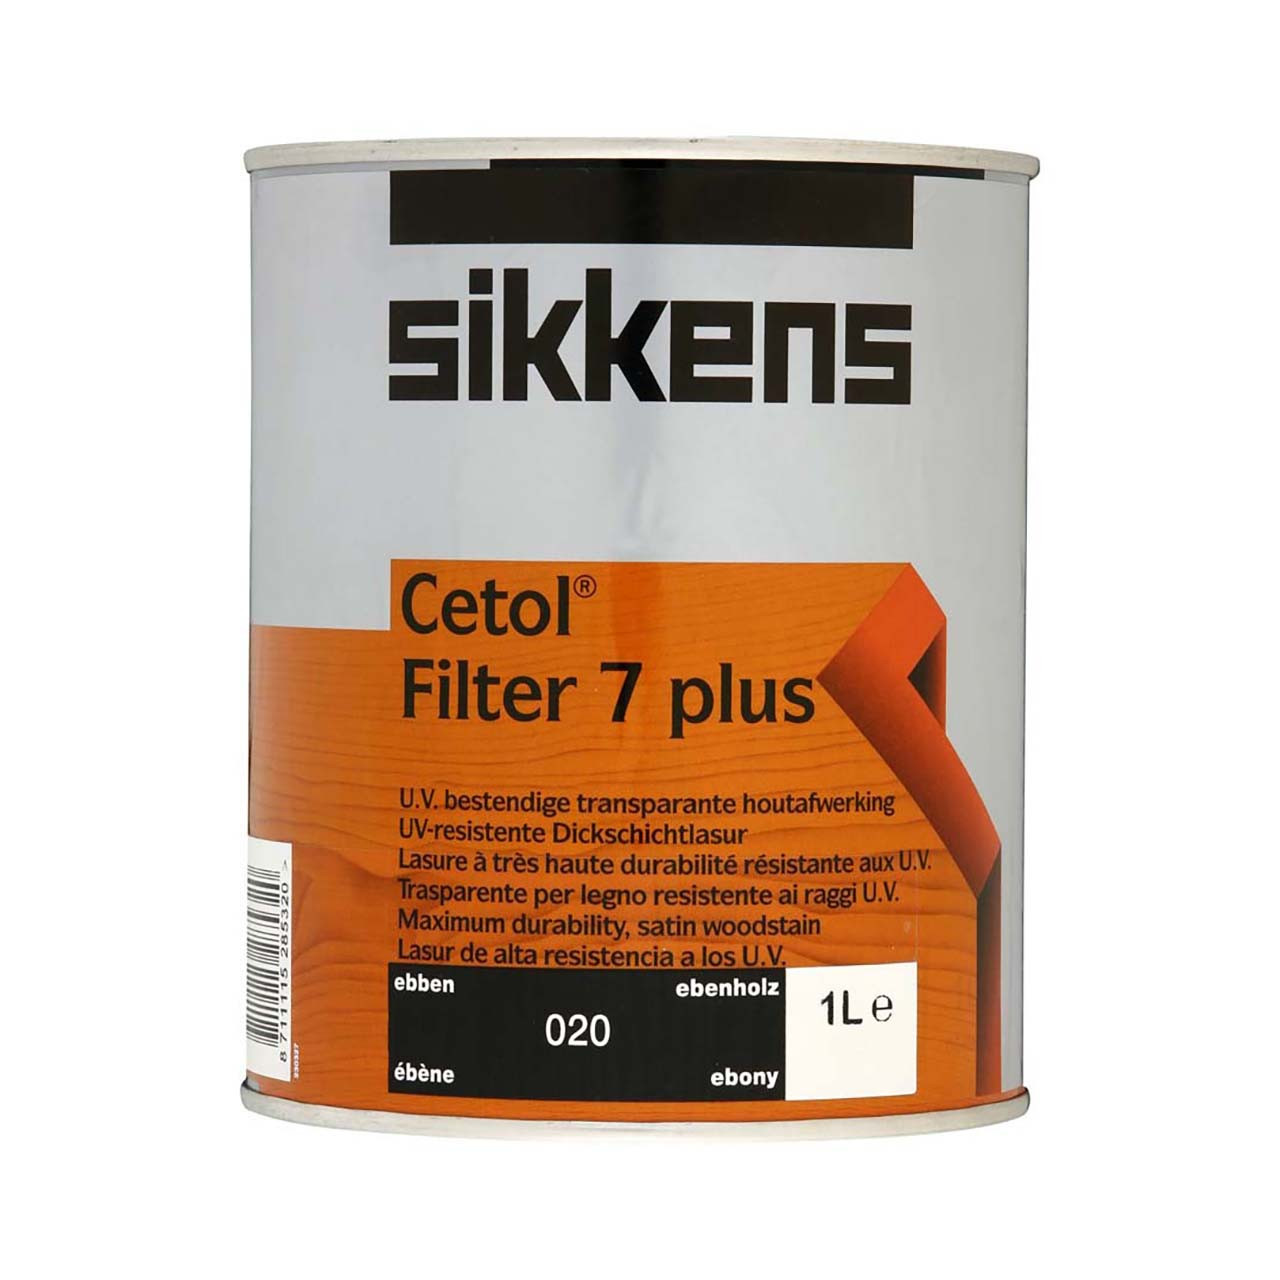 Photograph of Sikkens Cetol Filter 7 Plus 020 Ebony 1L Topcoat